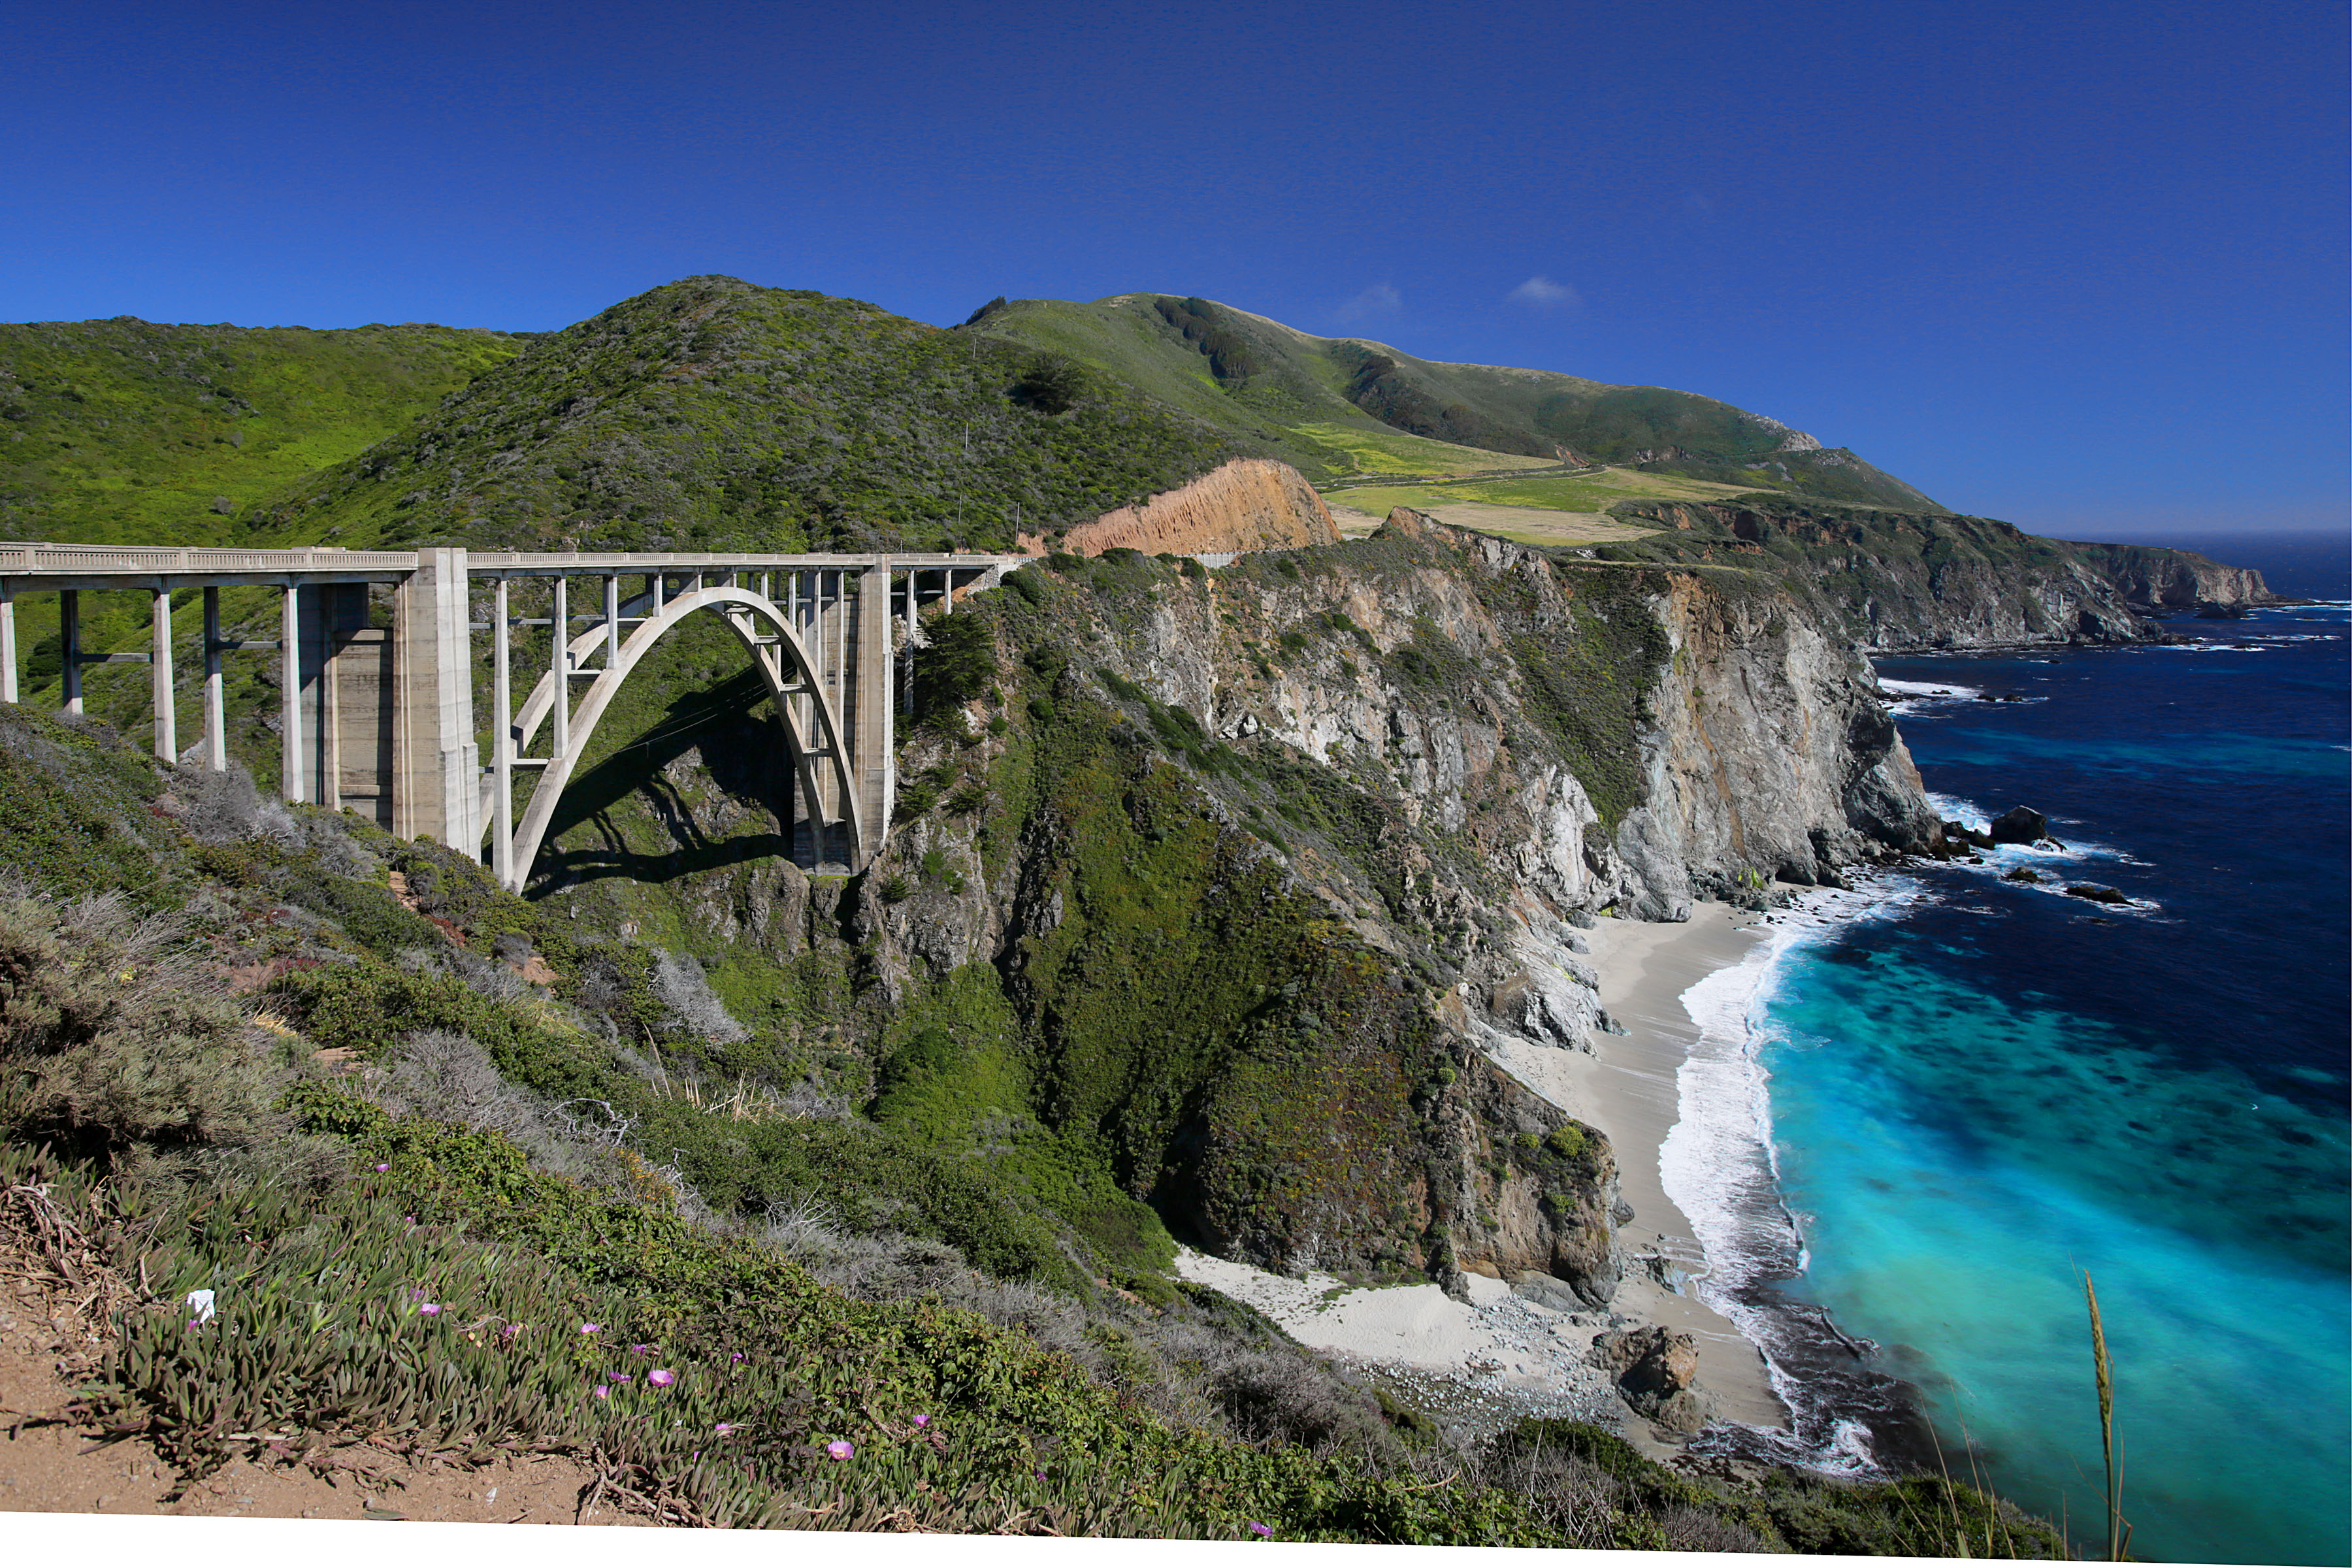 Monterey: A Super Quick Travel Guide